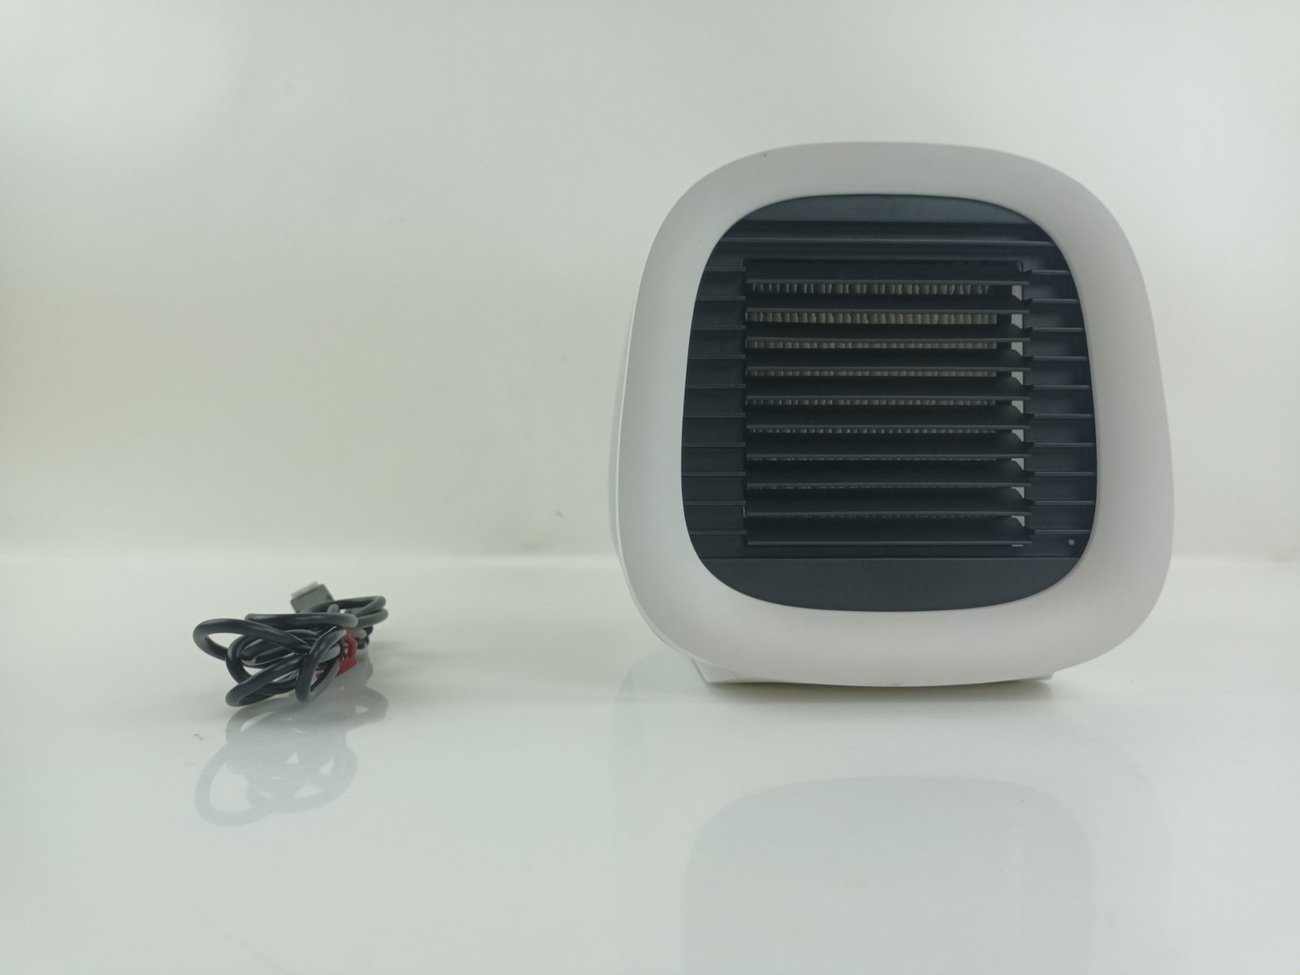 Мини въздушен охладител Evapolar EV-500 evaChill 800мл 4 скорости вентилатор с вода LED светлини преносим охладител мобилен климатик